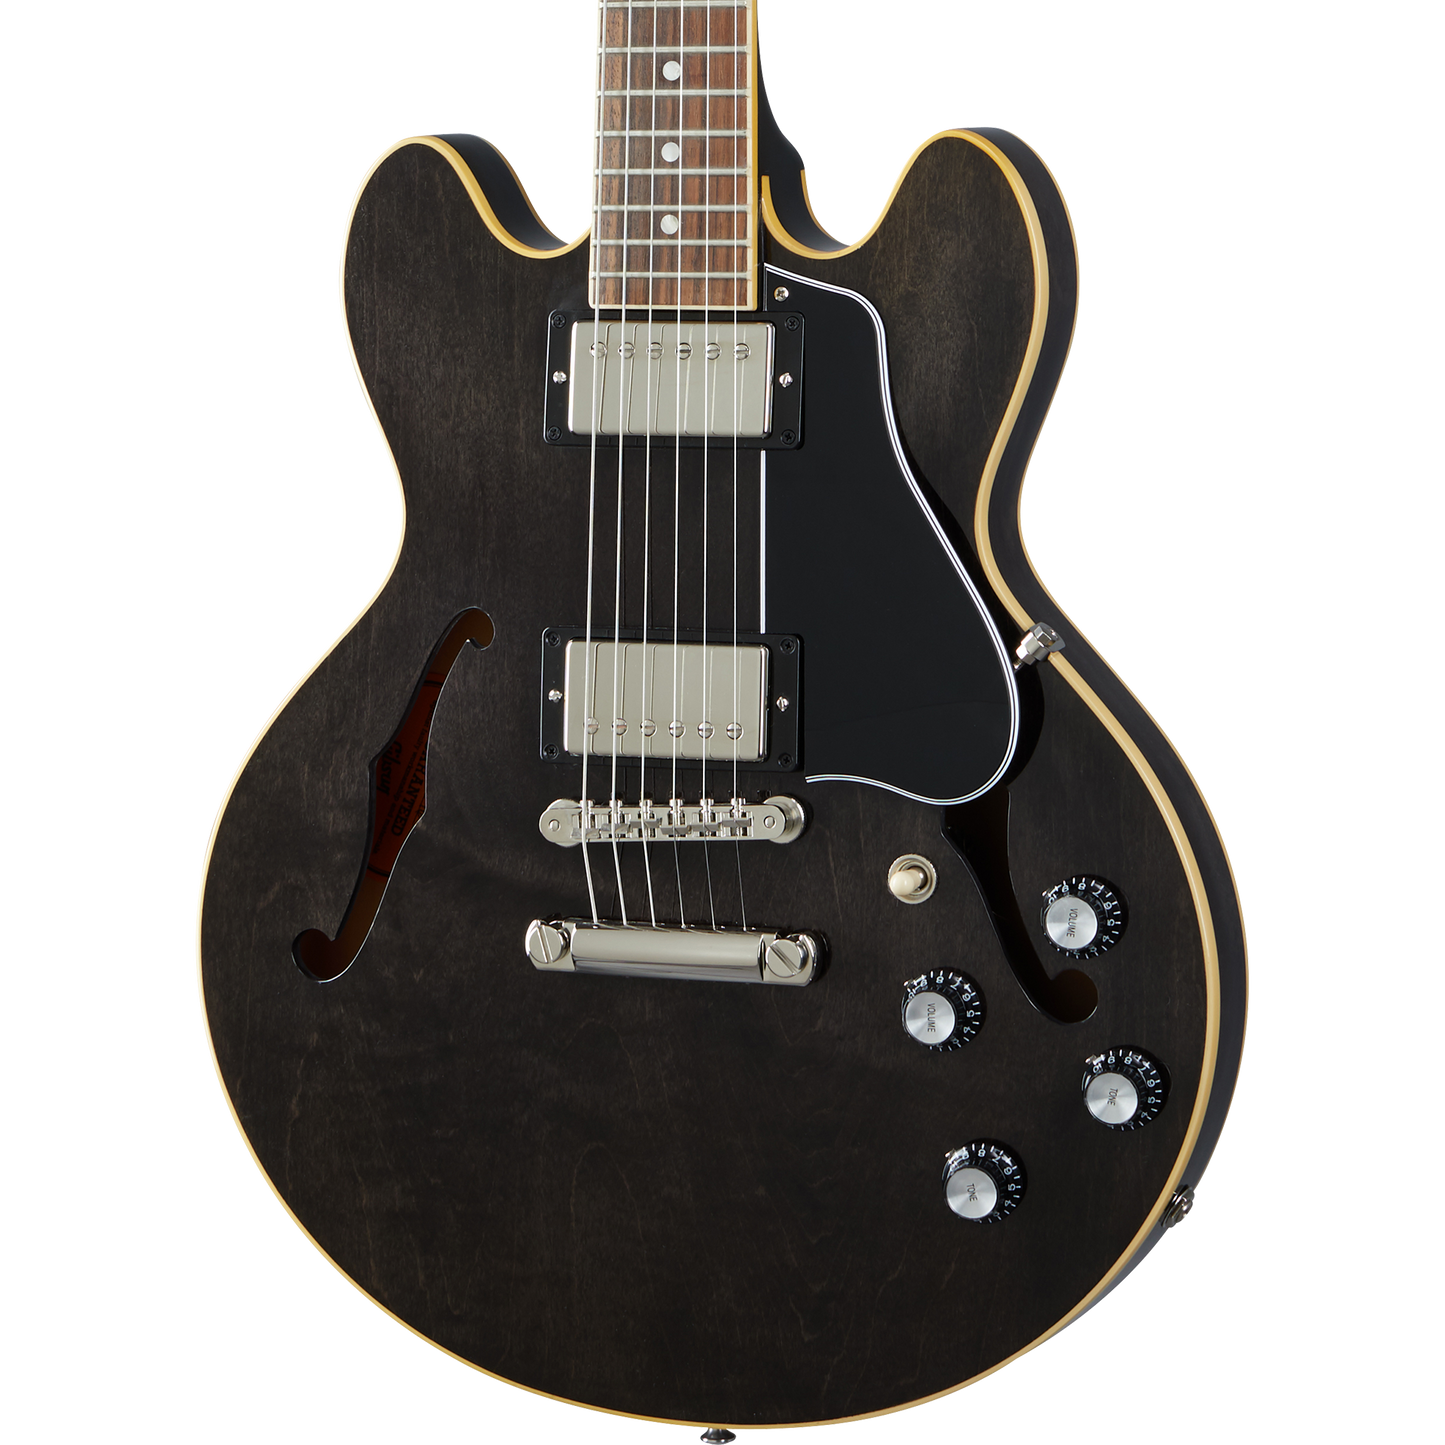 Gibson ES-339 Semi Hollow Electric Guitar in Transparent Ebony